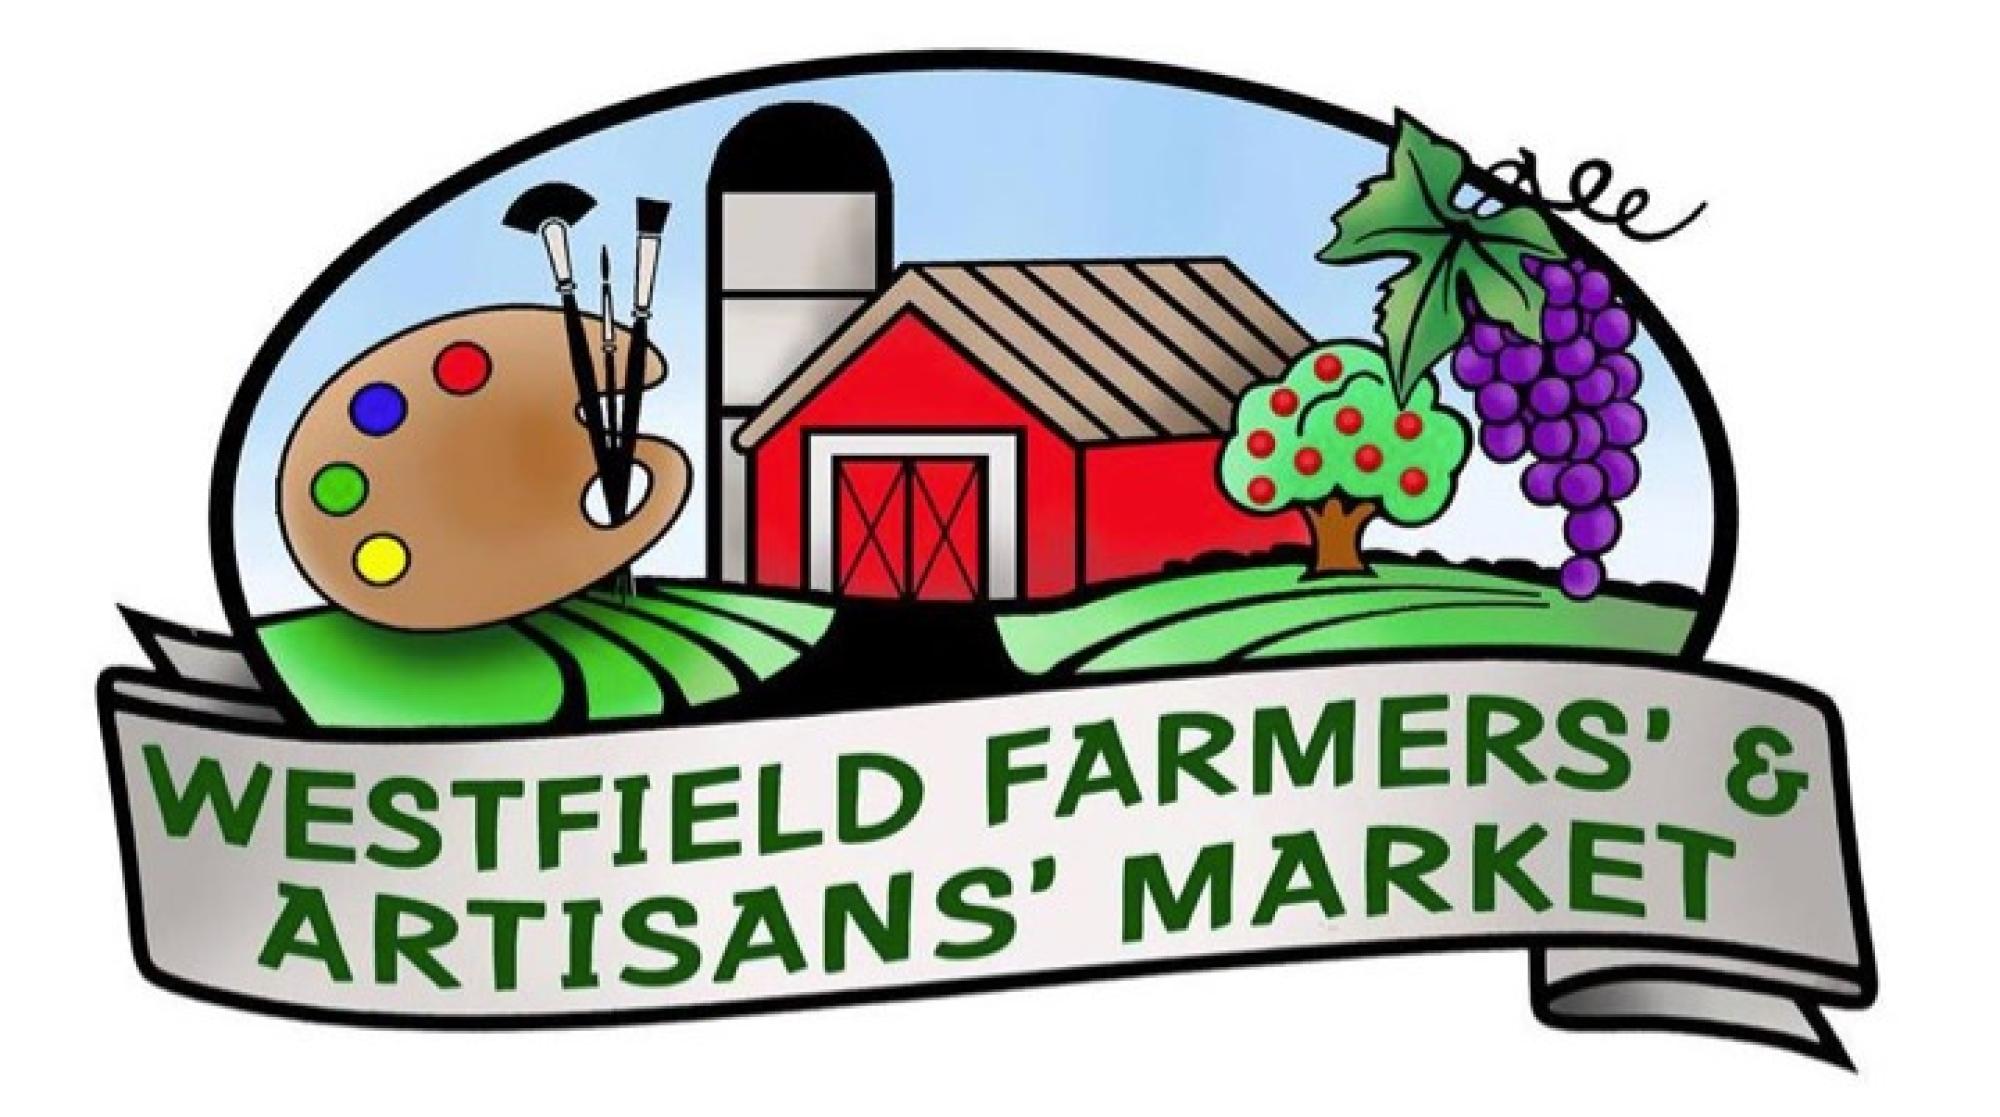 The Westfield Famers' &amp; Artisans' Market